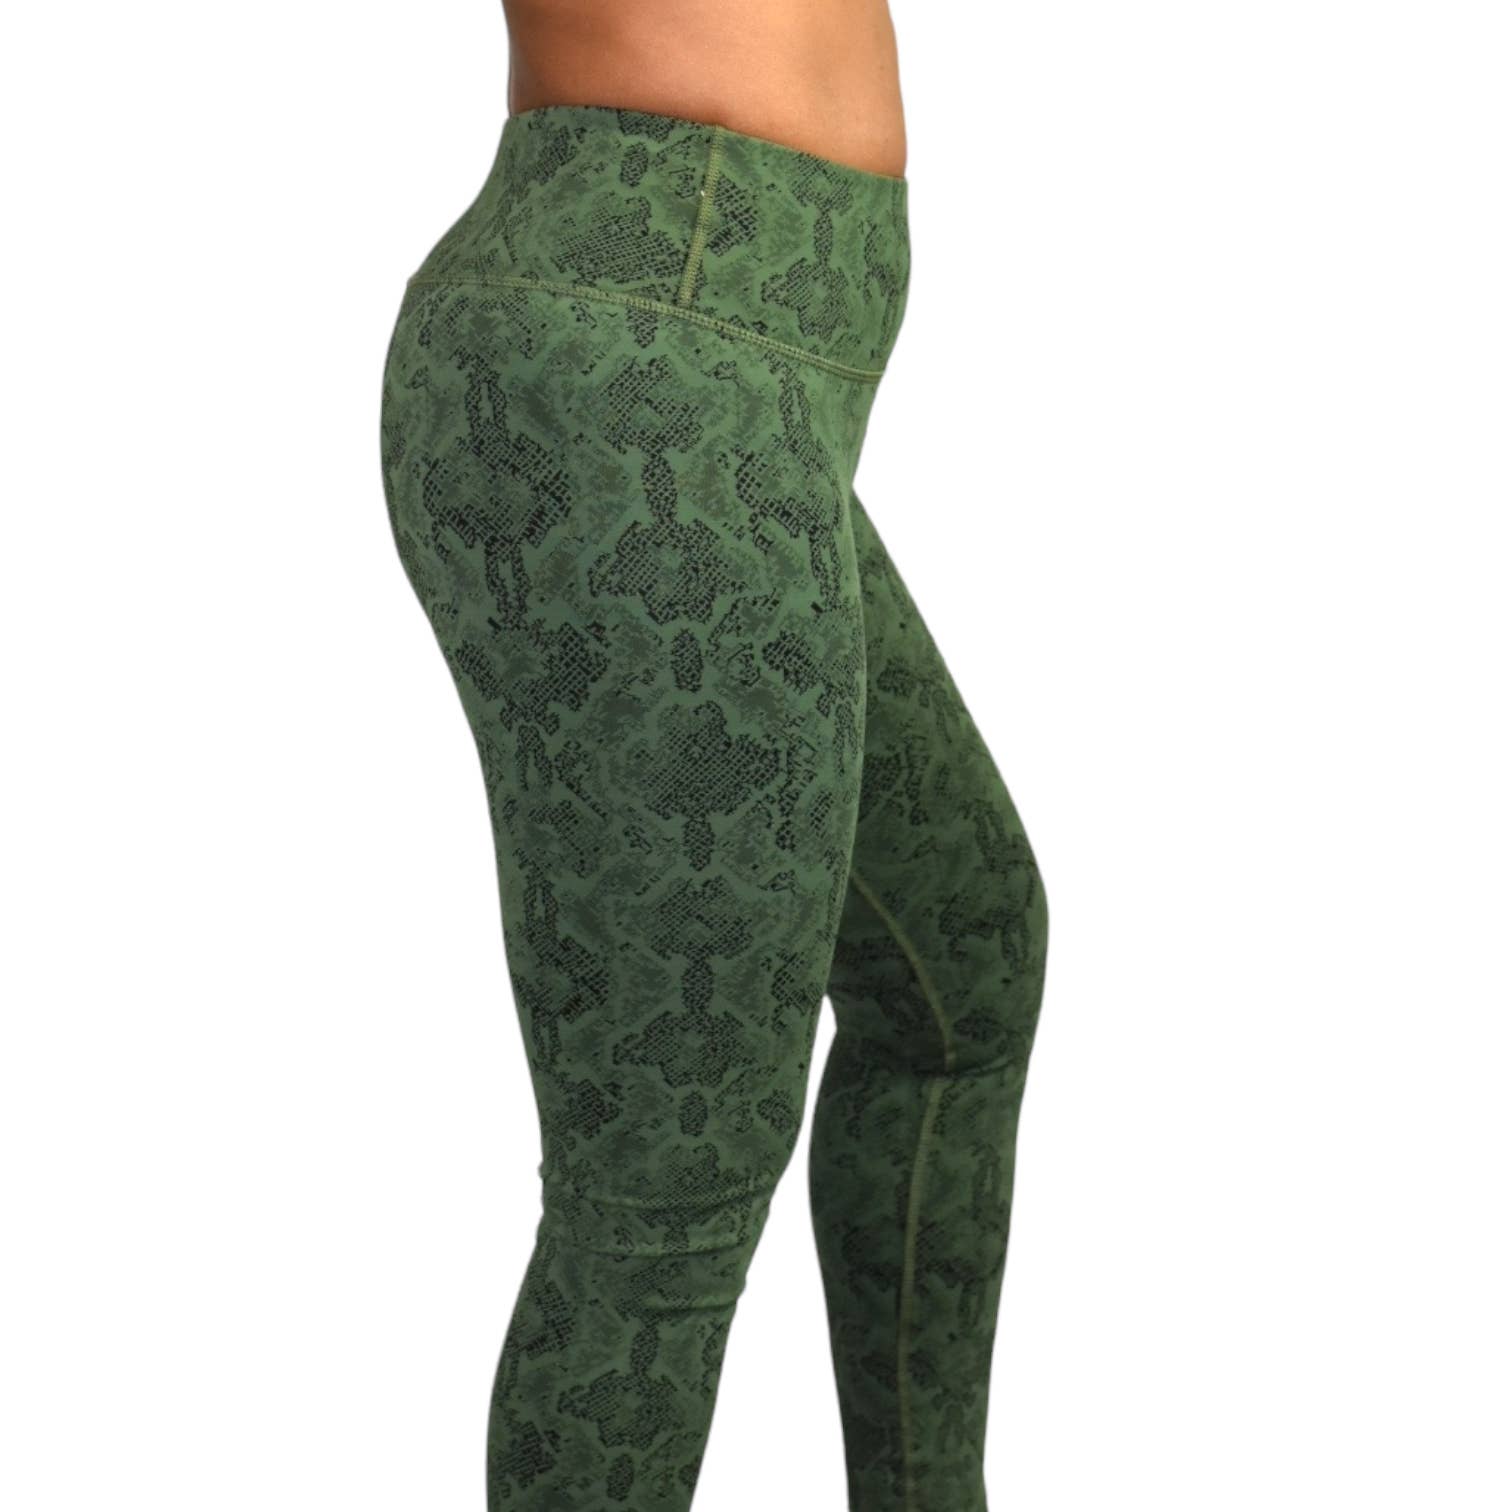 Vimmia Leggings Green Snake Python Print High Waist Stretch Activewear Size Small